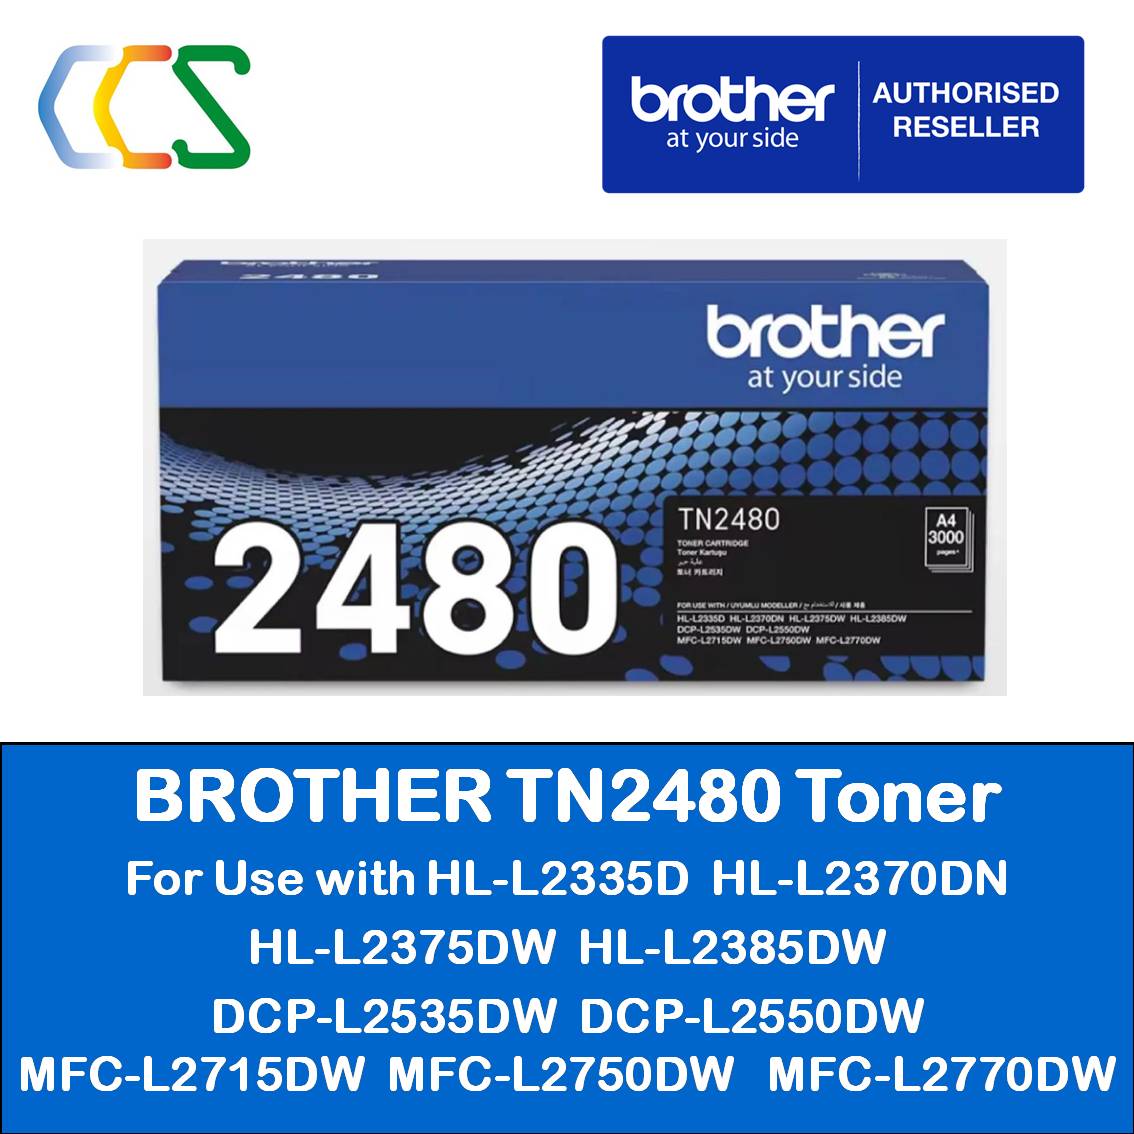 Brother Black Toner Cartridge For Dcp-l2535dw,dcp-2550dw,hl-2375dw